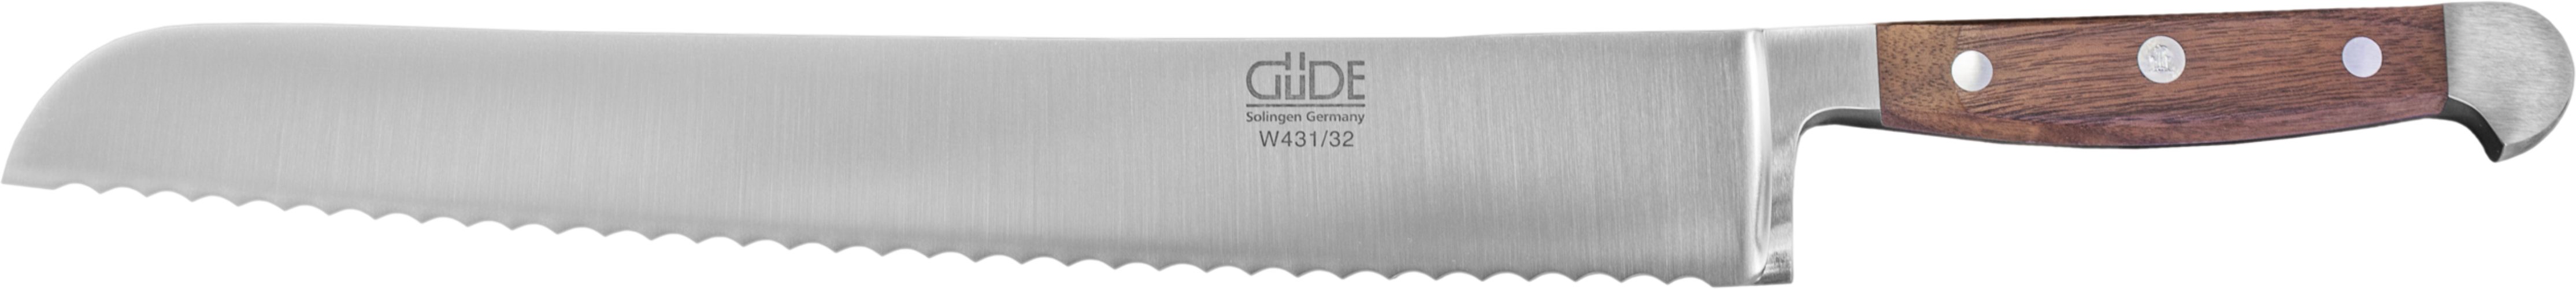 Güde Messer Solingen Brotmesser Brotmesser "Franz Güde", Serie Alpha Walnuss, geschmiedet, Doppelkropf, Griff Walnussholz - No. W431/32